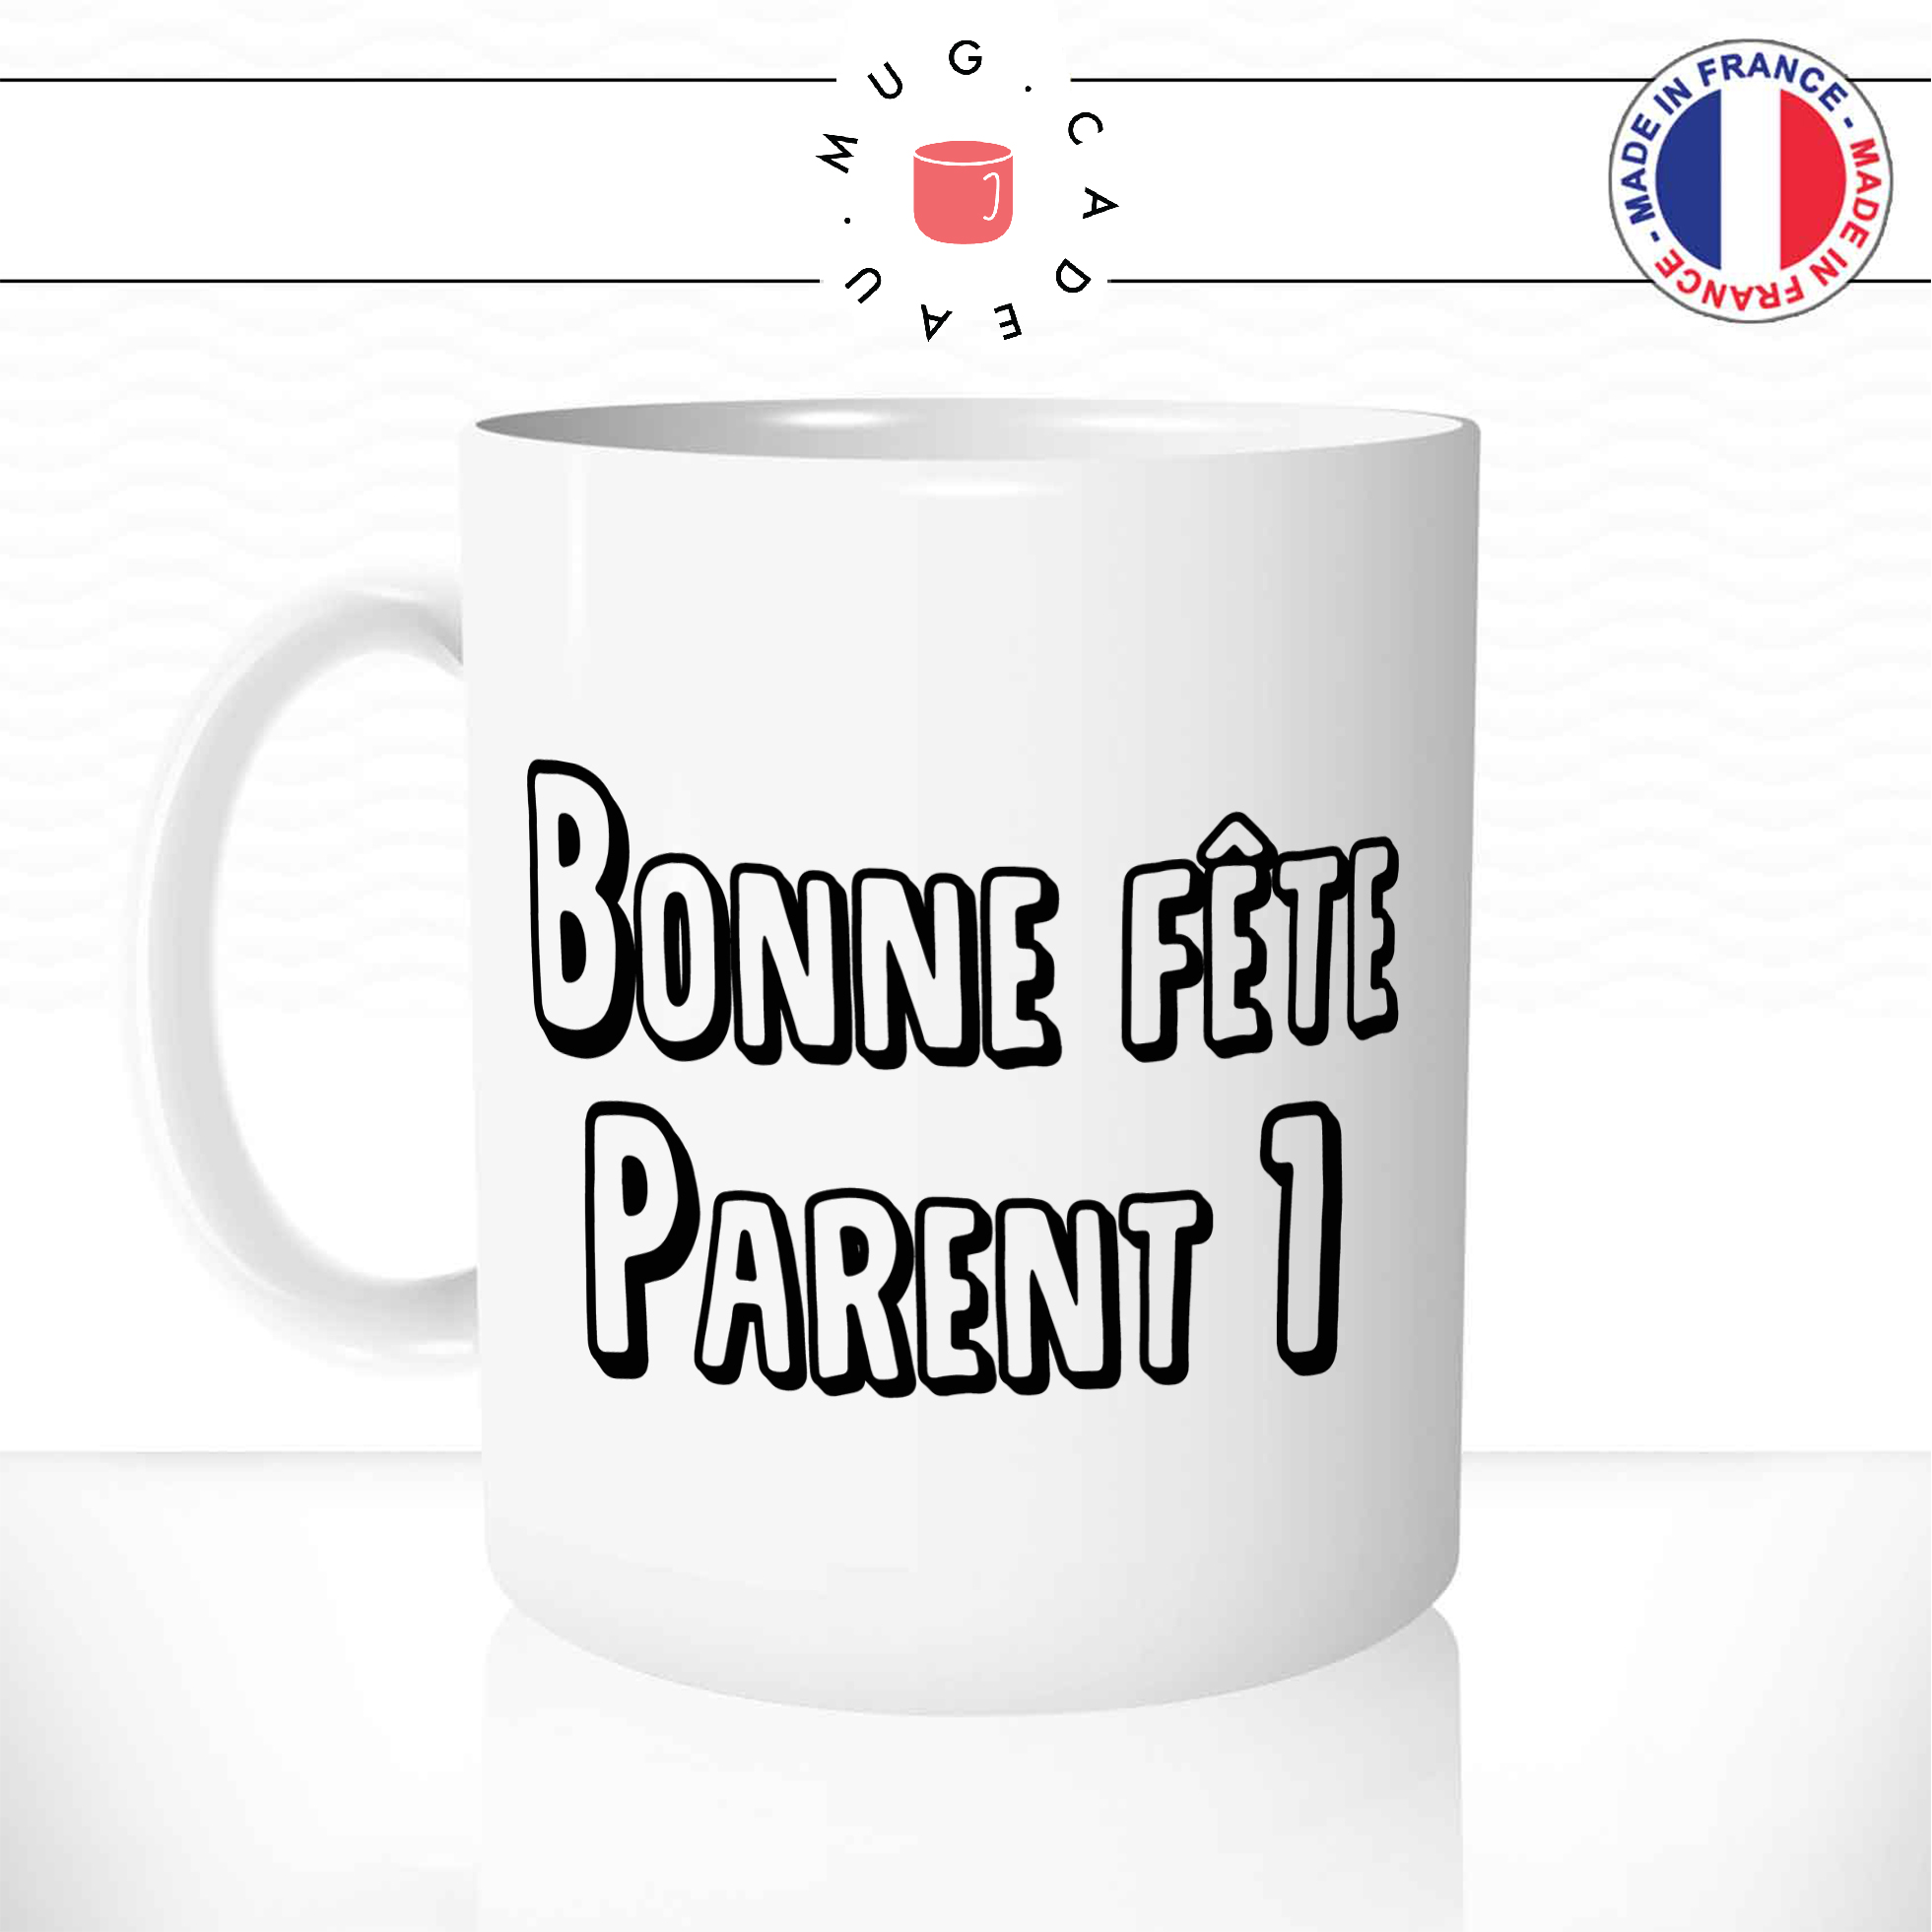 mug-tasse-ref14-fete-des-peres-parent-1-troll-lgbt-cafe-the-mugs-tasses-personnalise-anse-gauche